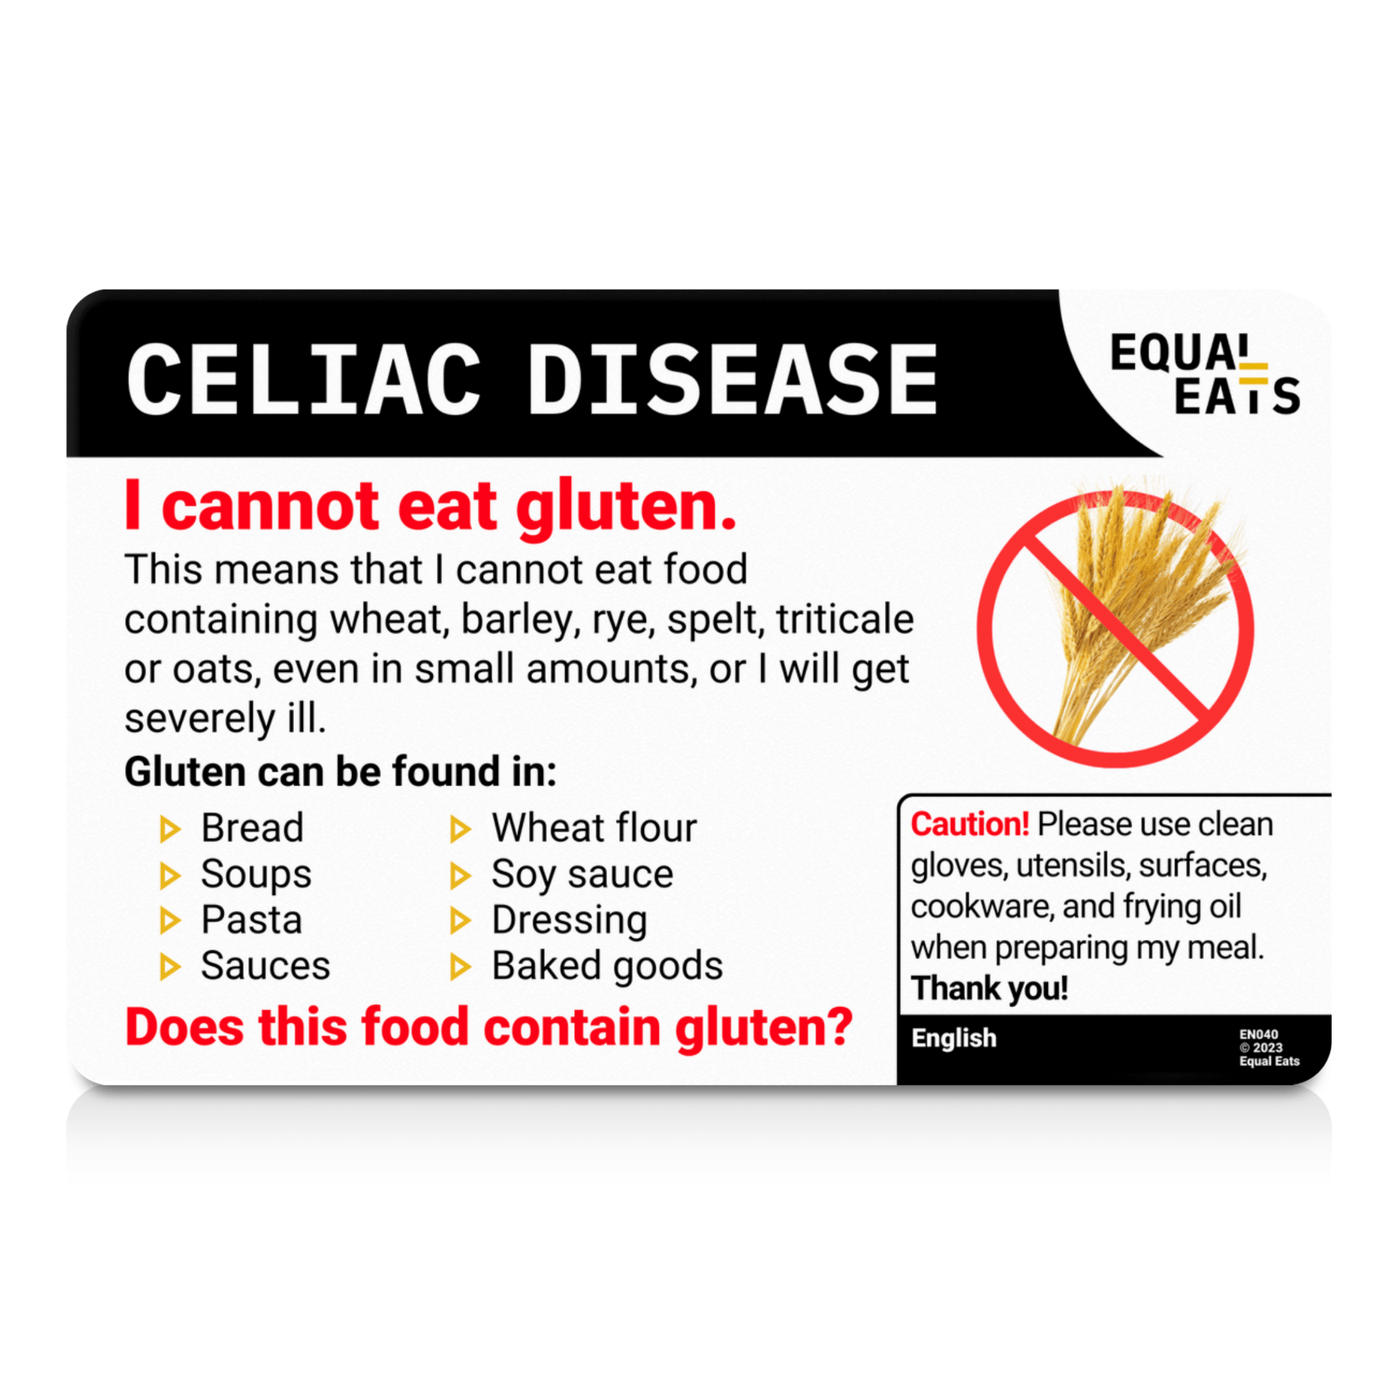 Dutch (Netherlands) Celiac Disease Card